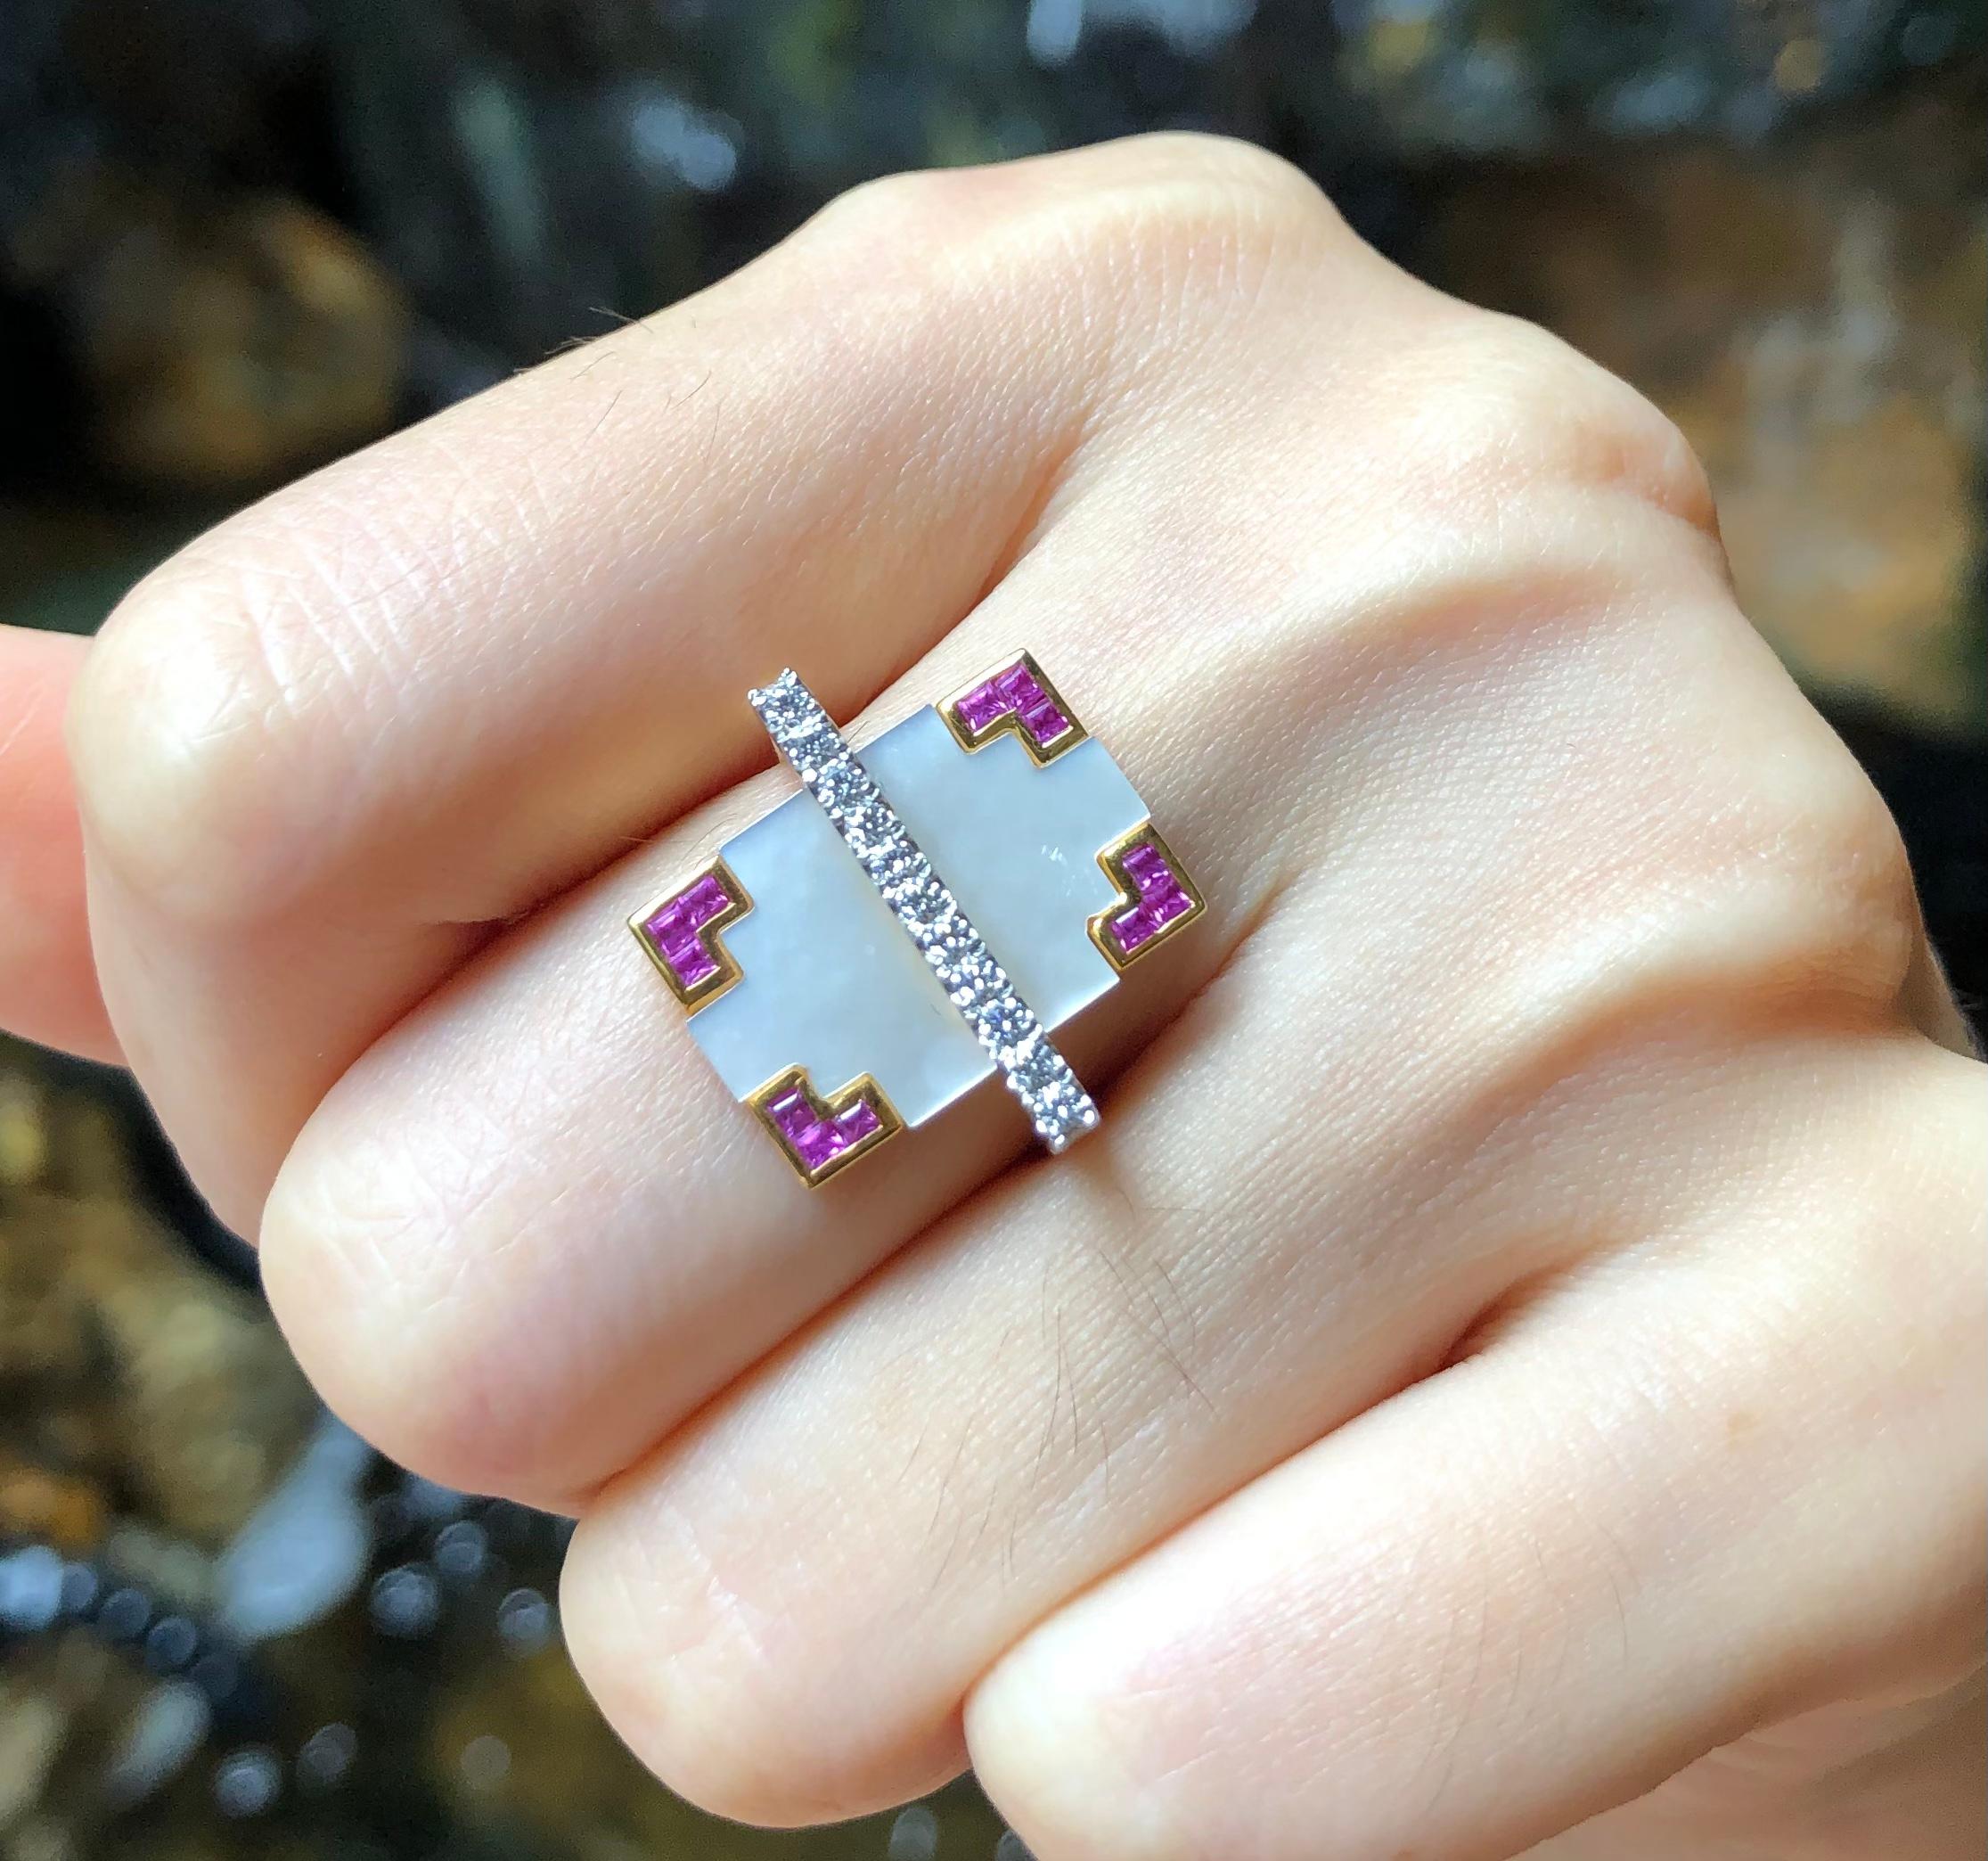 Diamond 0.29 carat and Pink Sapphire 0.56 carat Ring set in 18 Karat Gold Settings

Width:  2.0 cm 
Length:  1.8 cm
Ring Size: 52
Total Weight: 6.37 grams

